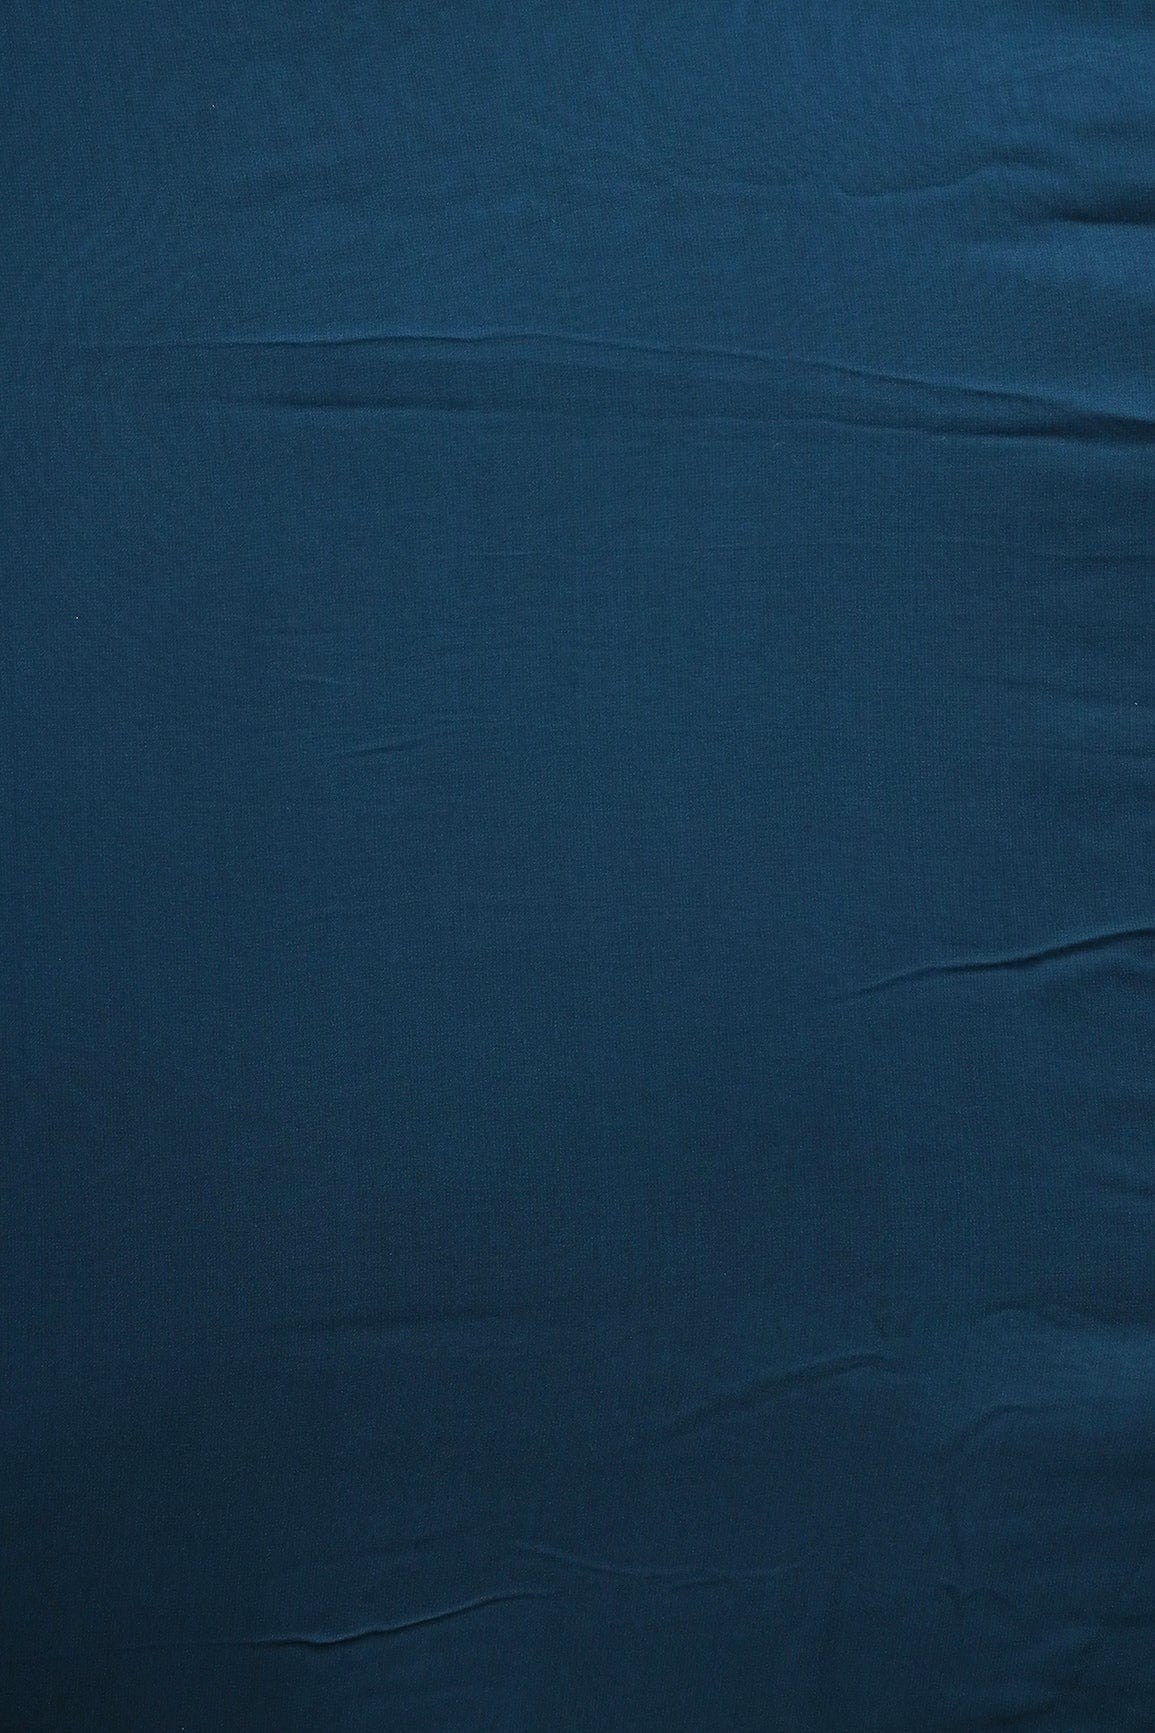 doeraa Plain Fabrics Prussian Blue Dyed Viscose Georgette Fabric